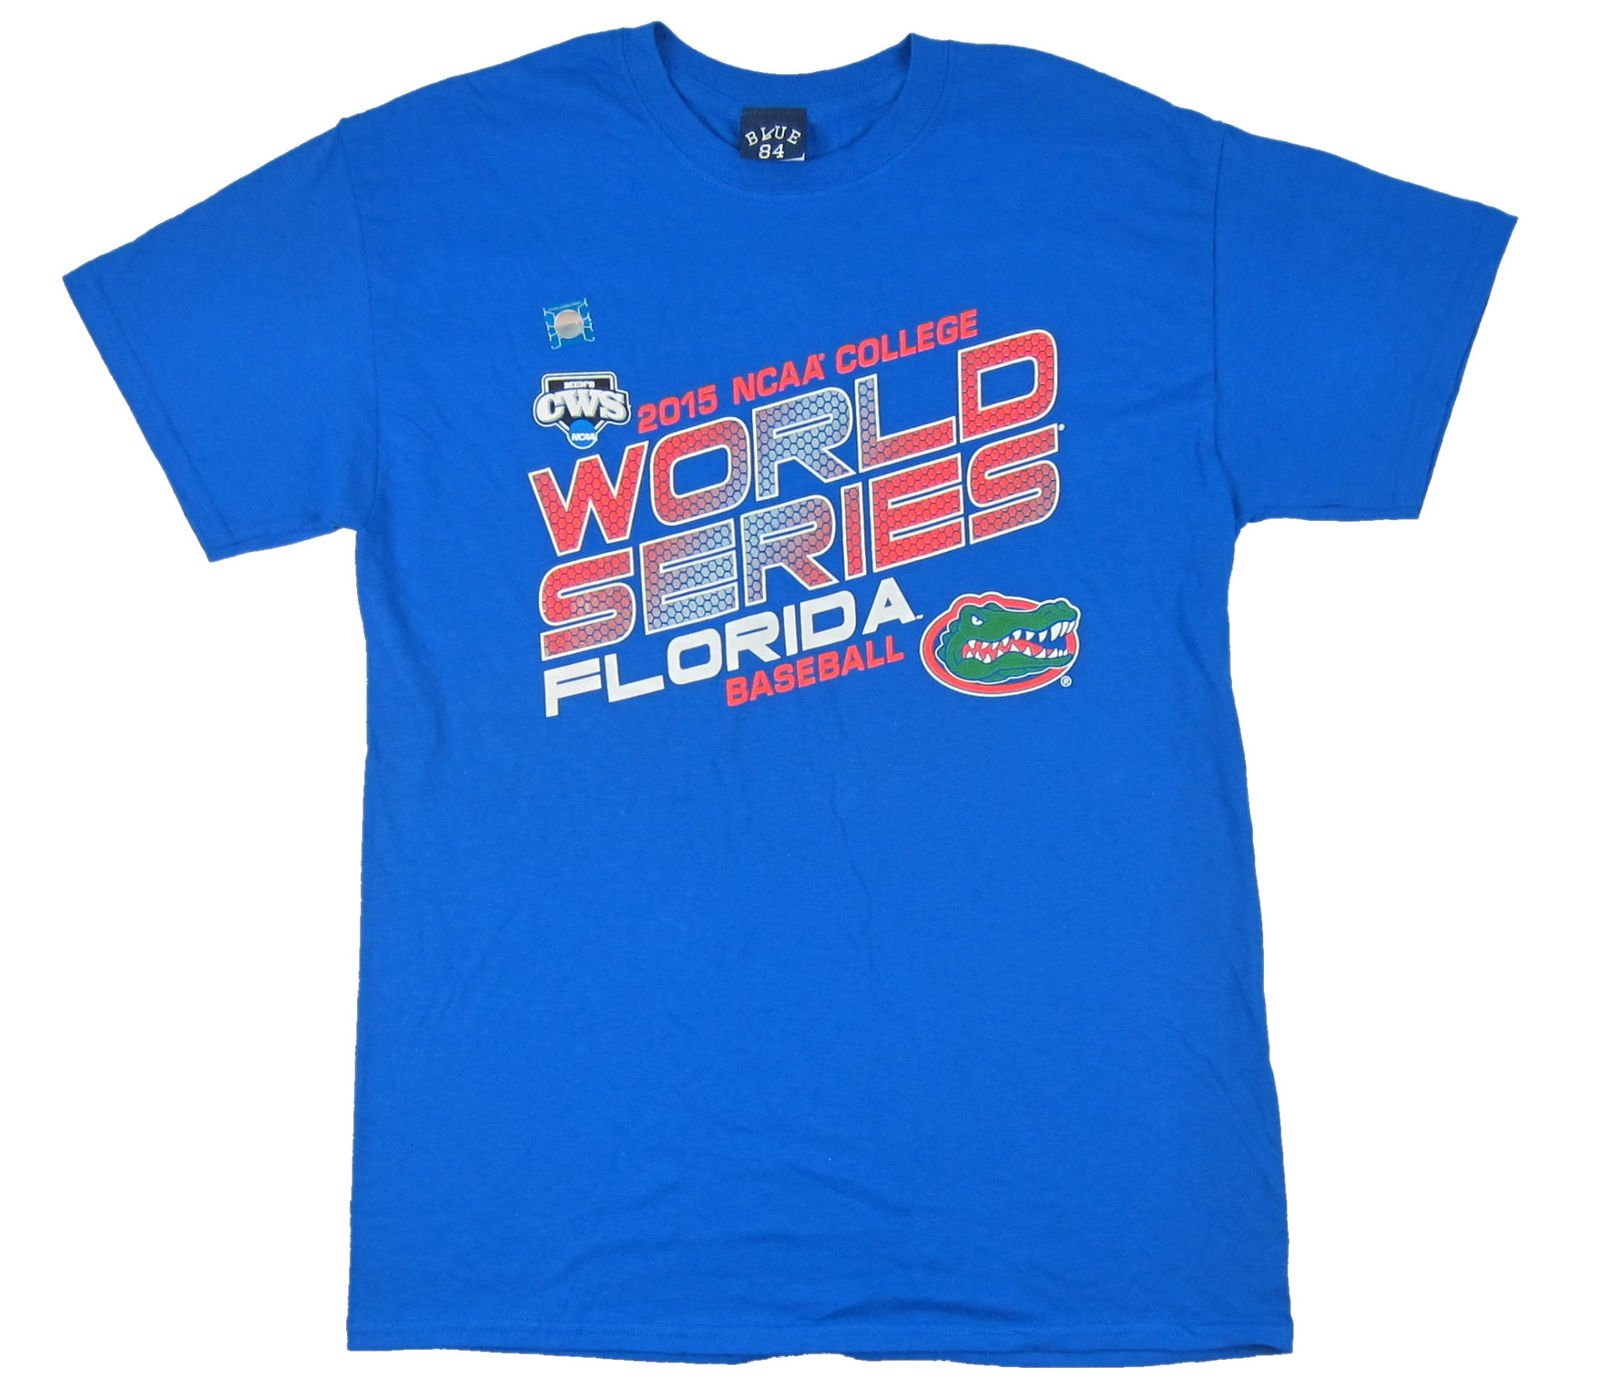 Blue 84 - 2015 World Series Florida Baseball Blue T-Shirt - Sizes ...